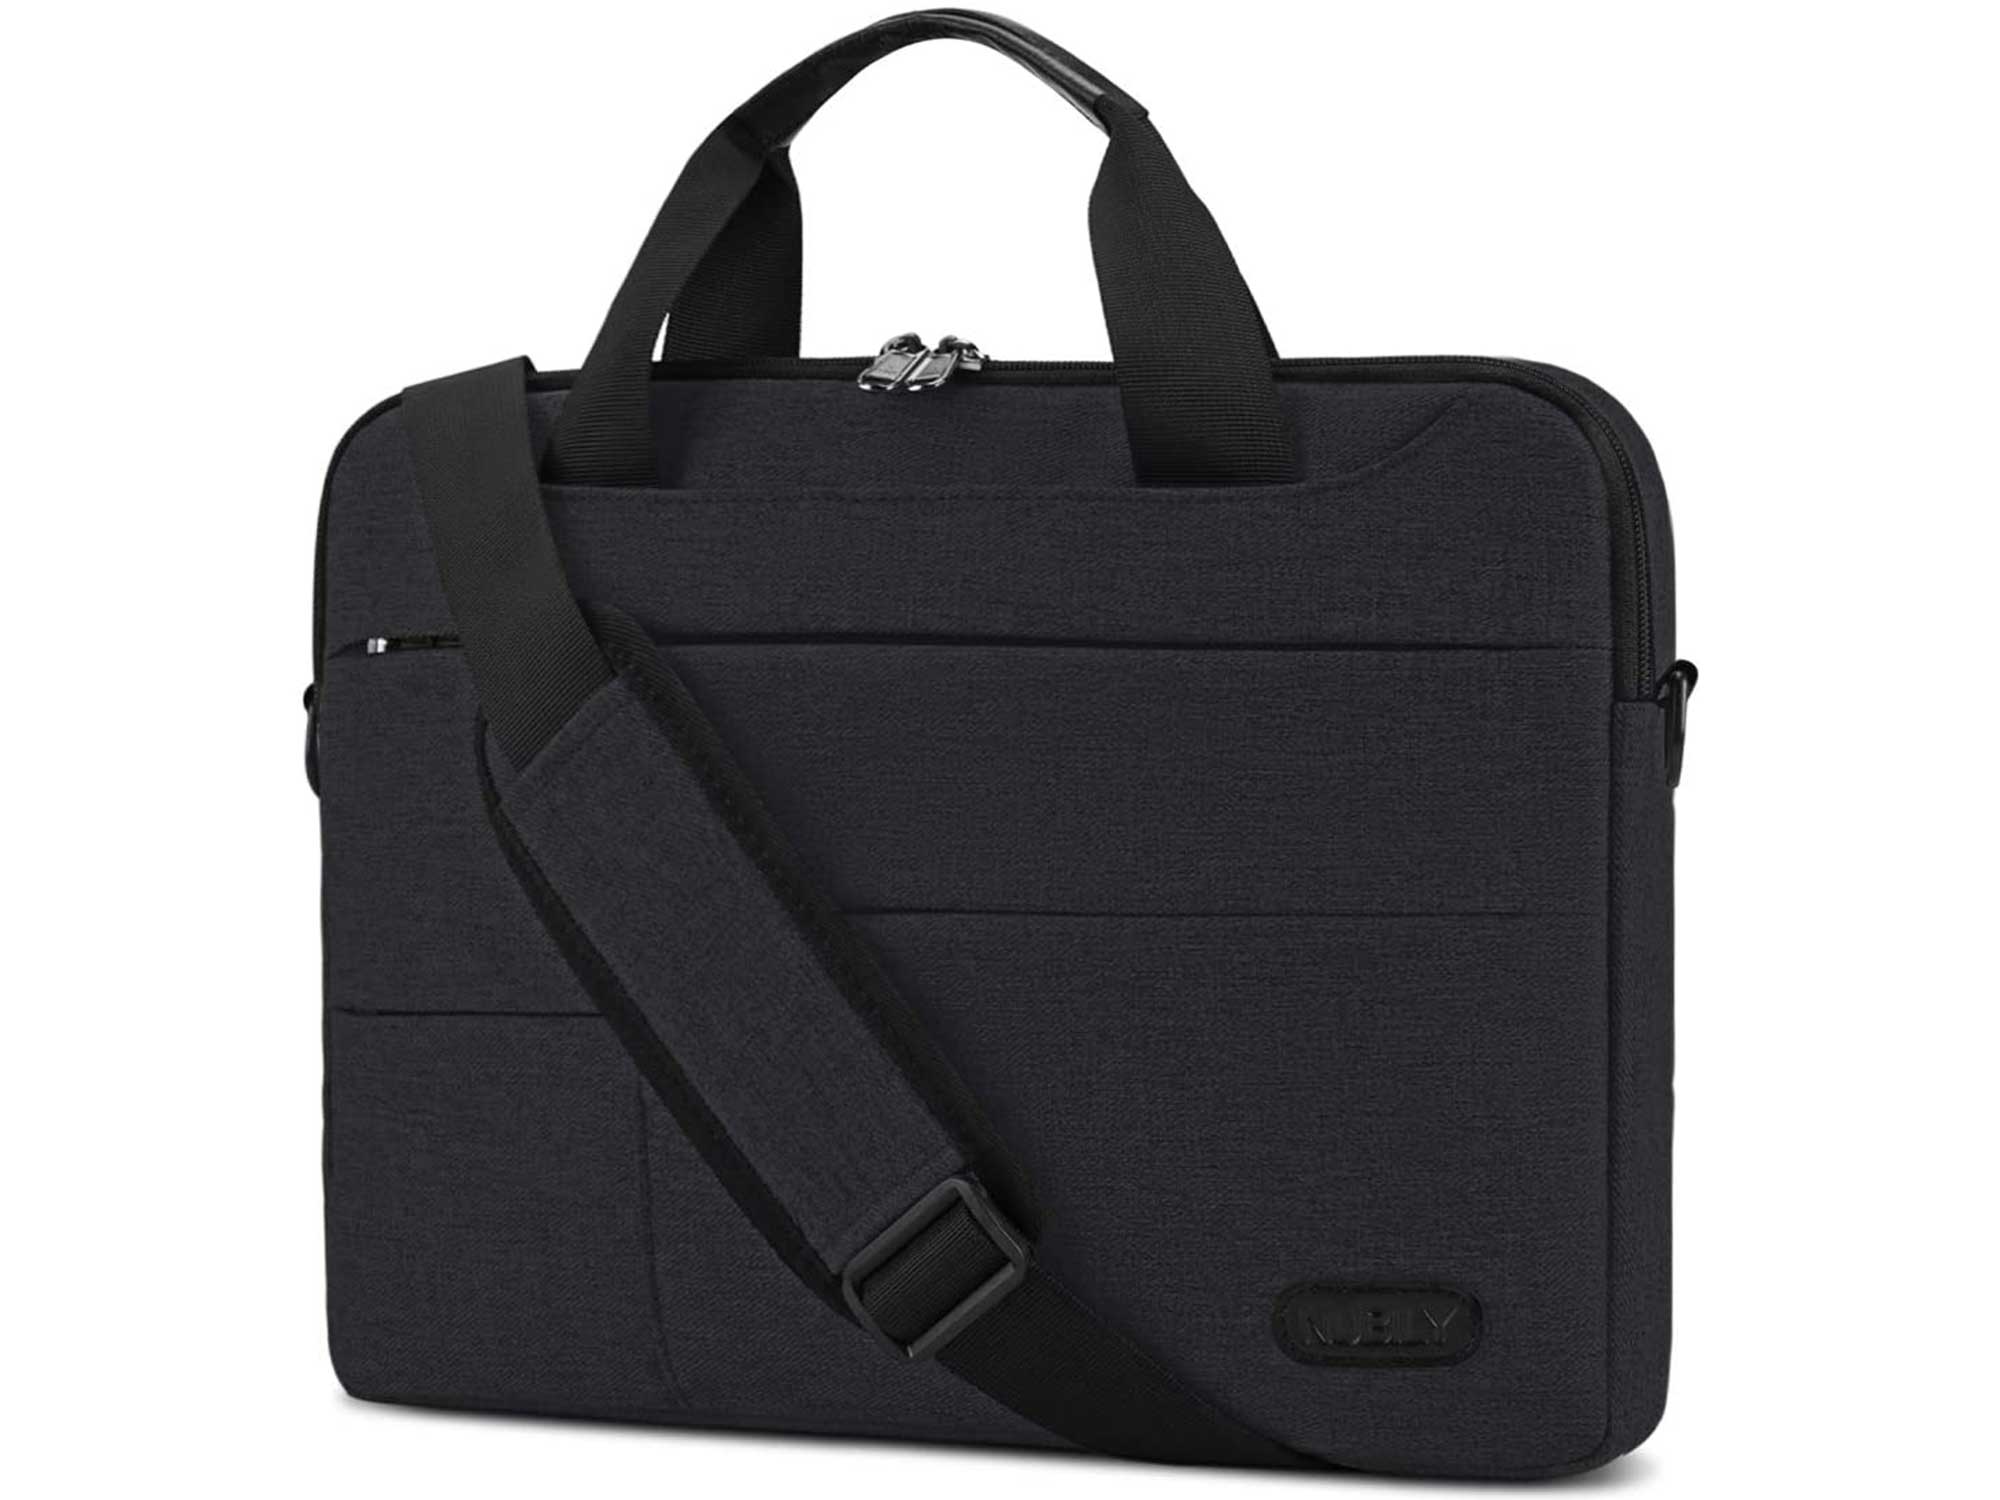 NUBILY briefcase